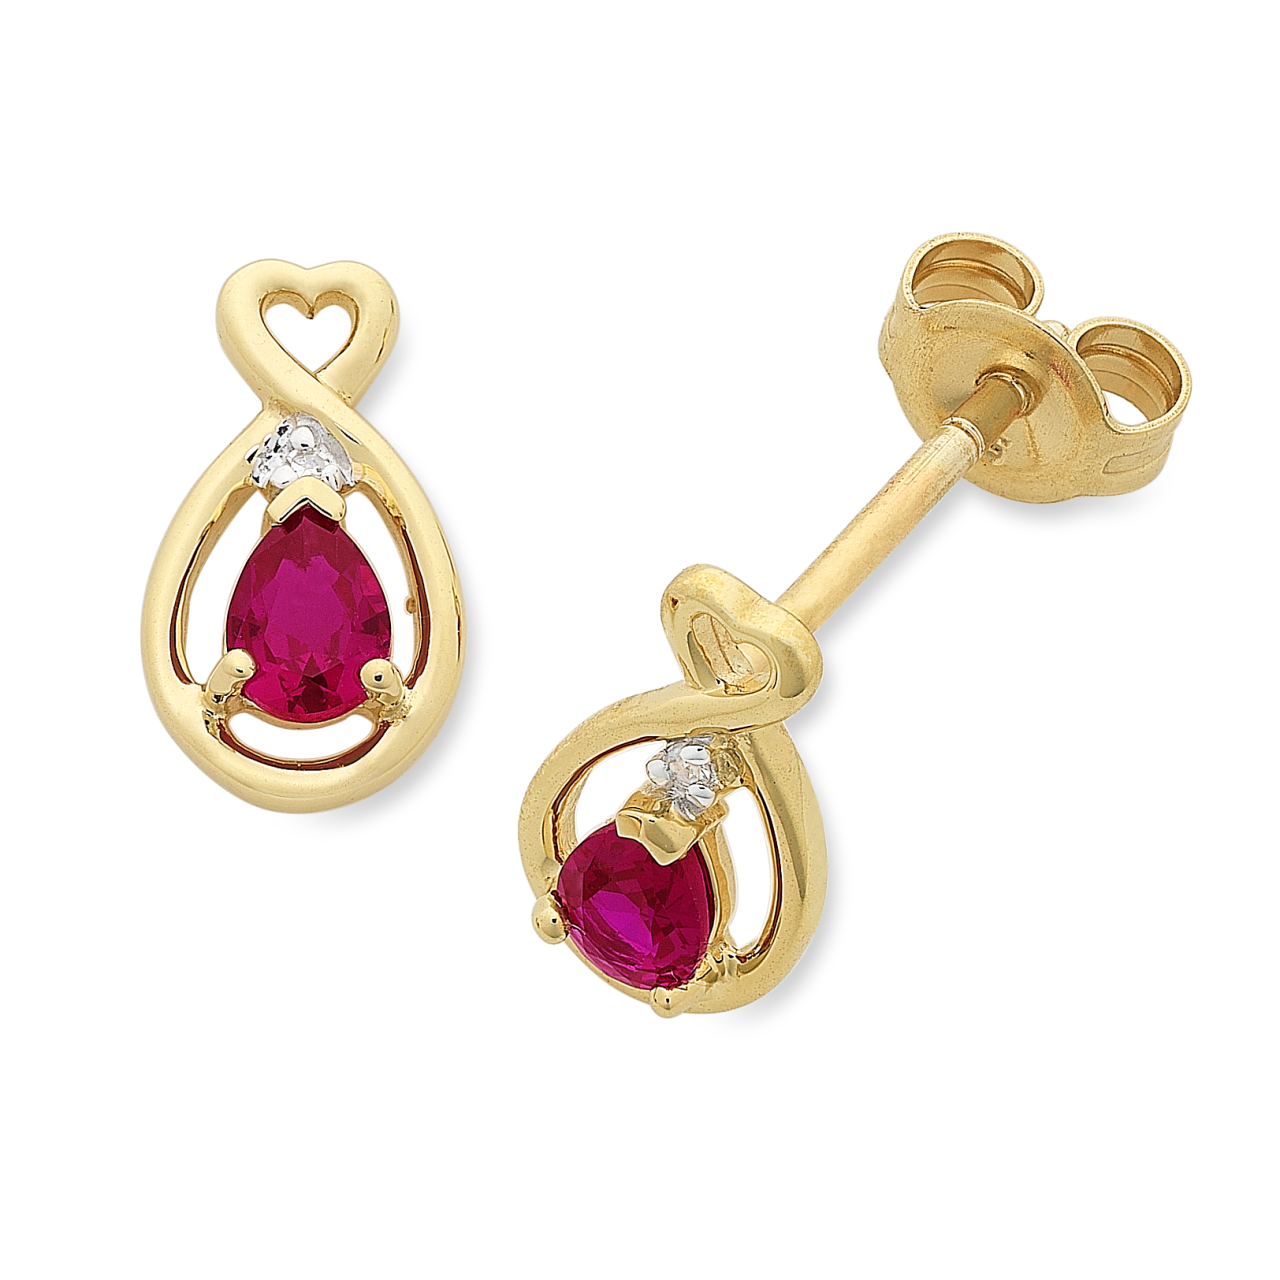 9ct gold created ruby & diamond earrings